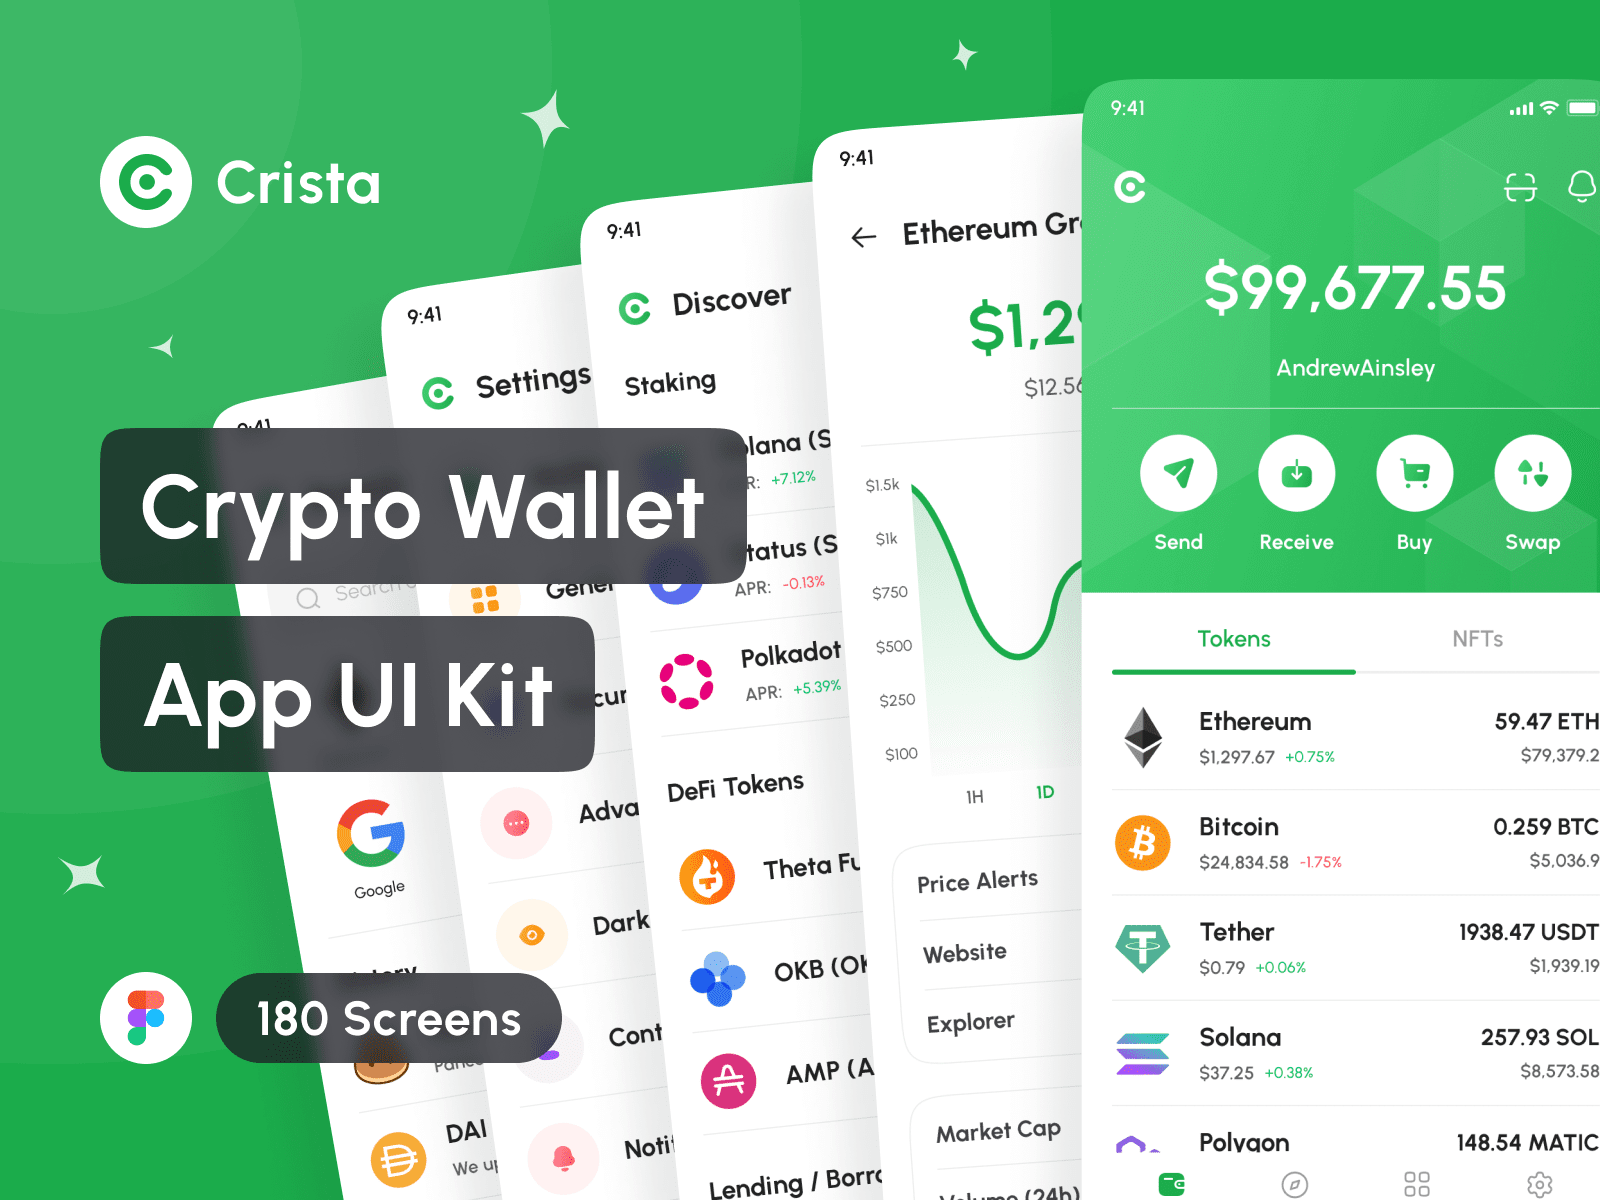 Crista - Crypto Wallet App UI Kit by Sobakhul Munir Siroj on Dribbble